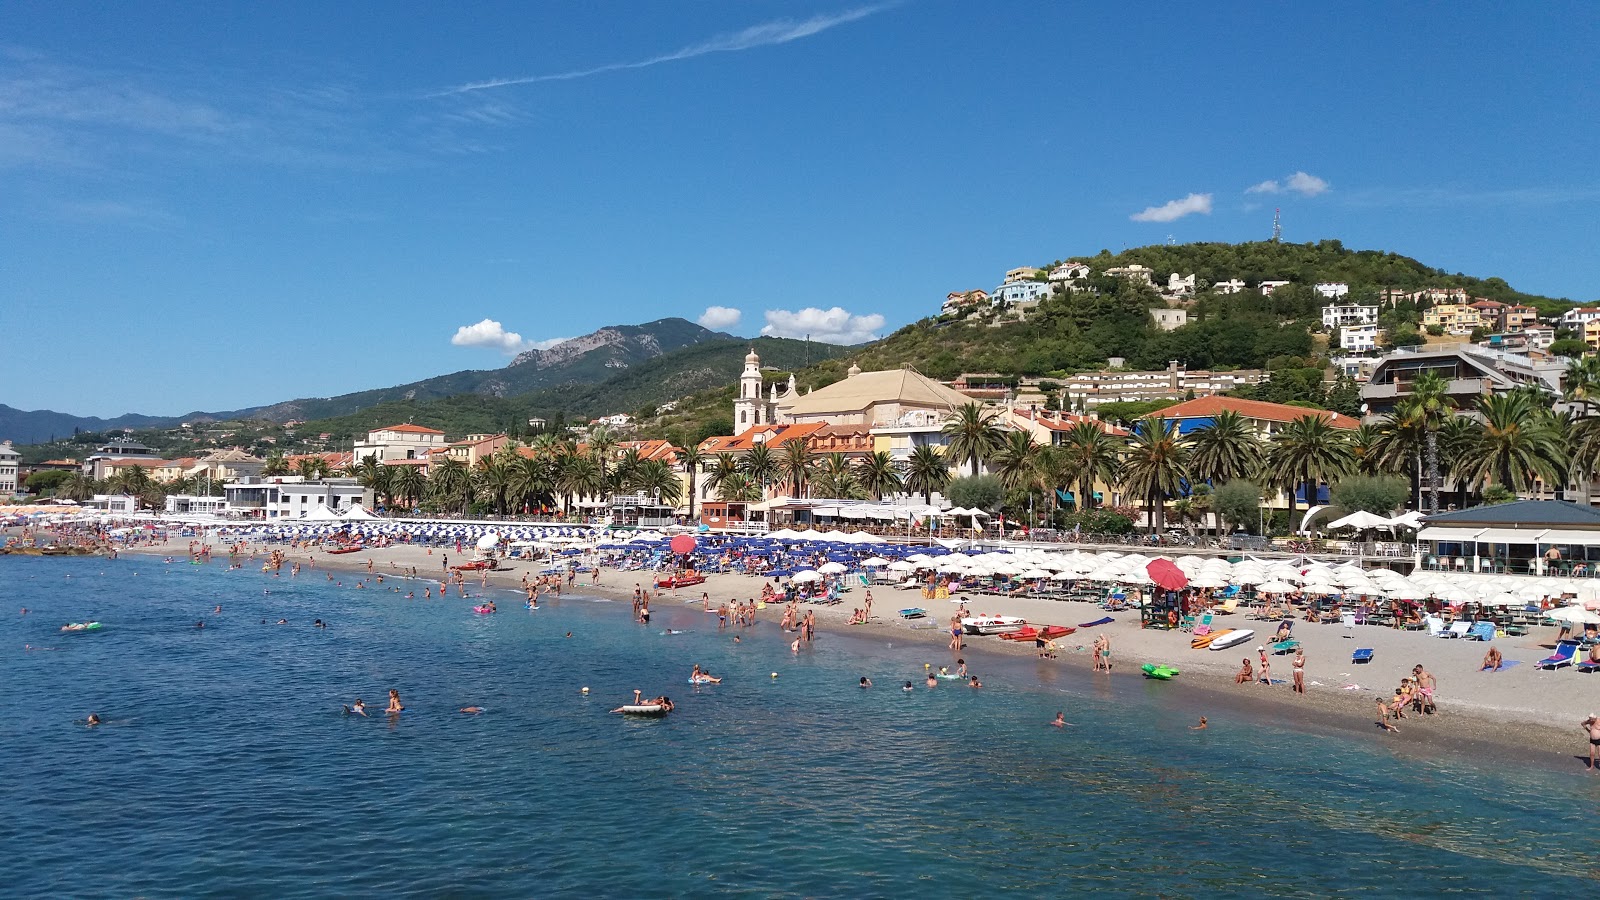 Photo of Spiaggia di Don Giovanni Bado with spacious shore